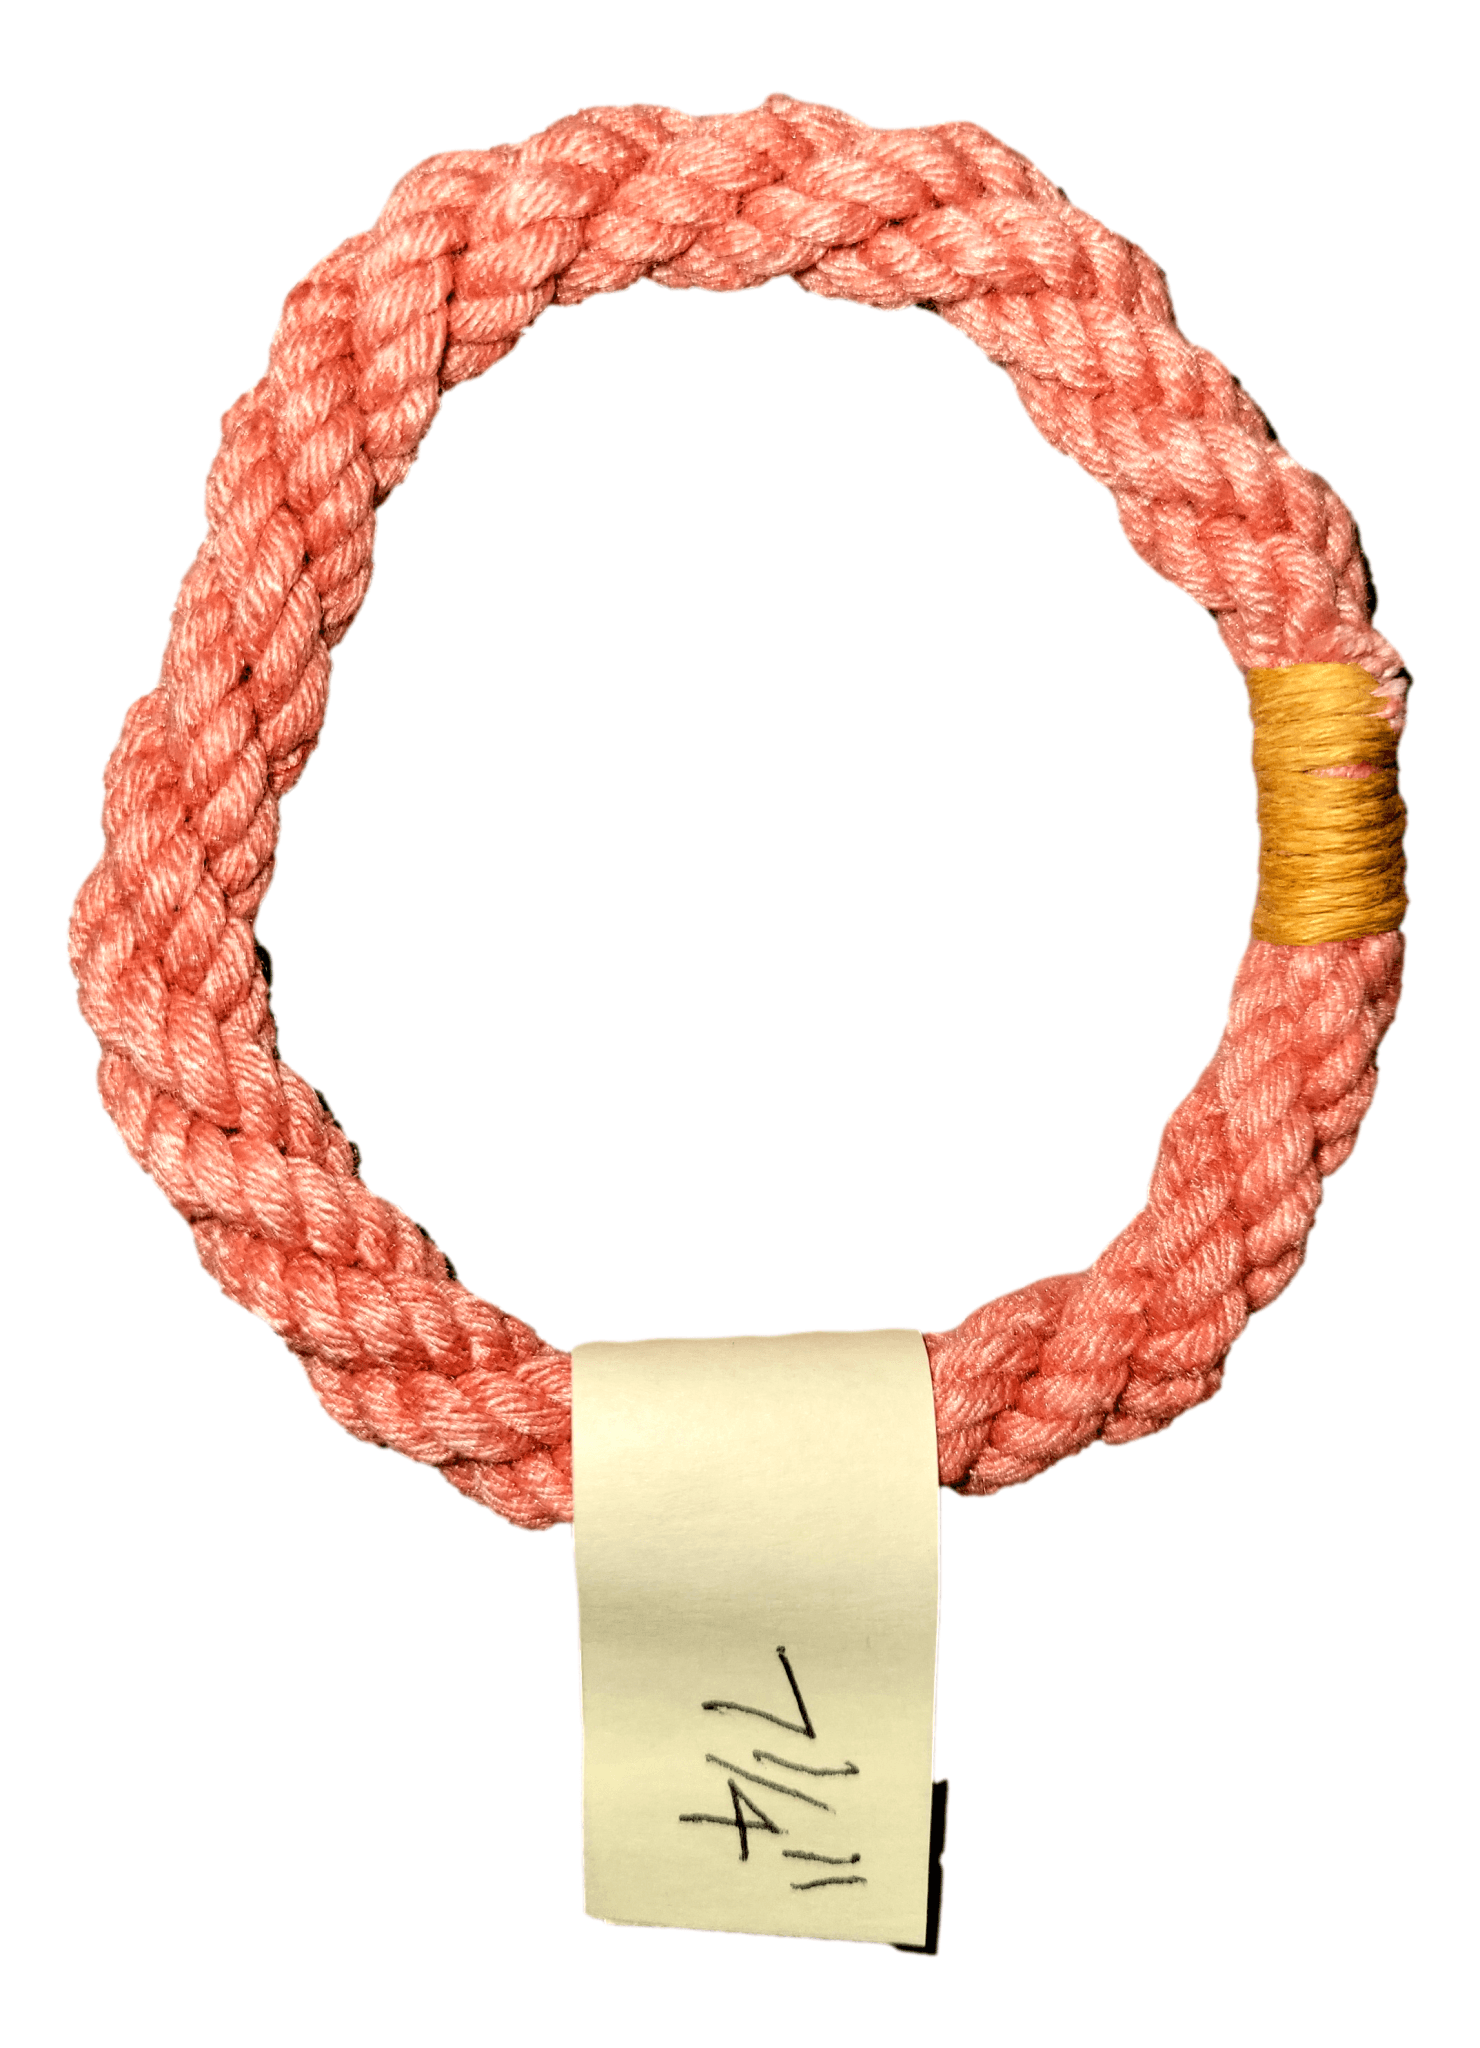 Bracelet Pink Rope Handcrafted Old-World Technique Slip-On Ends Secured Traditional Sailmaker's Detail - Ysleta Mission Gift Shop- VOTED El Paso's Best Gift Shop